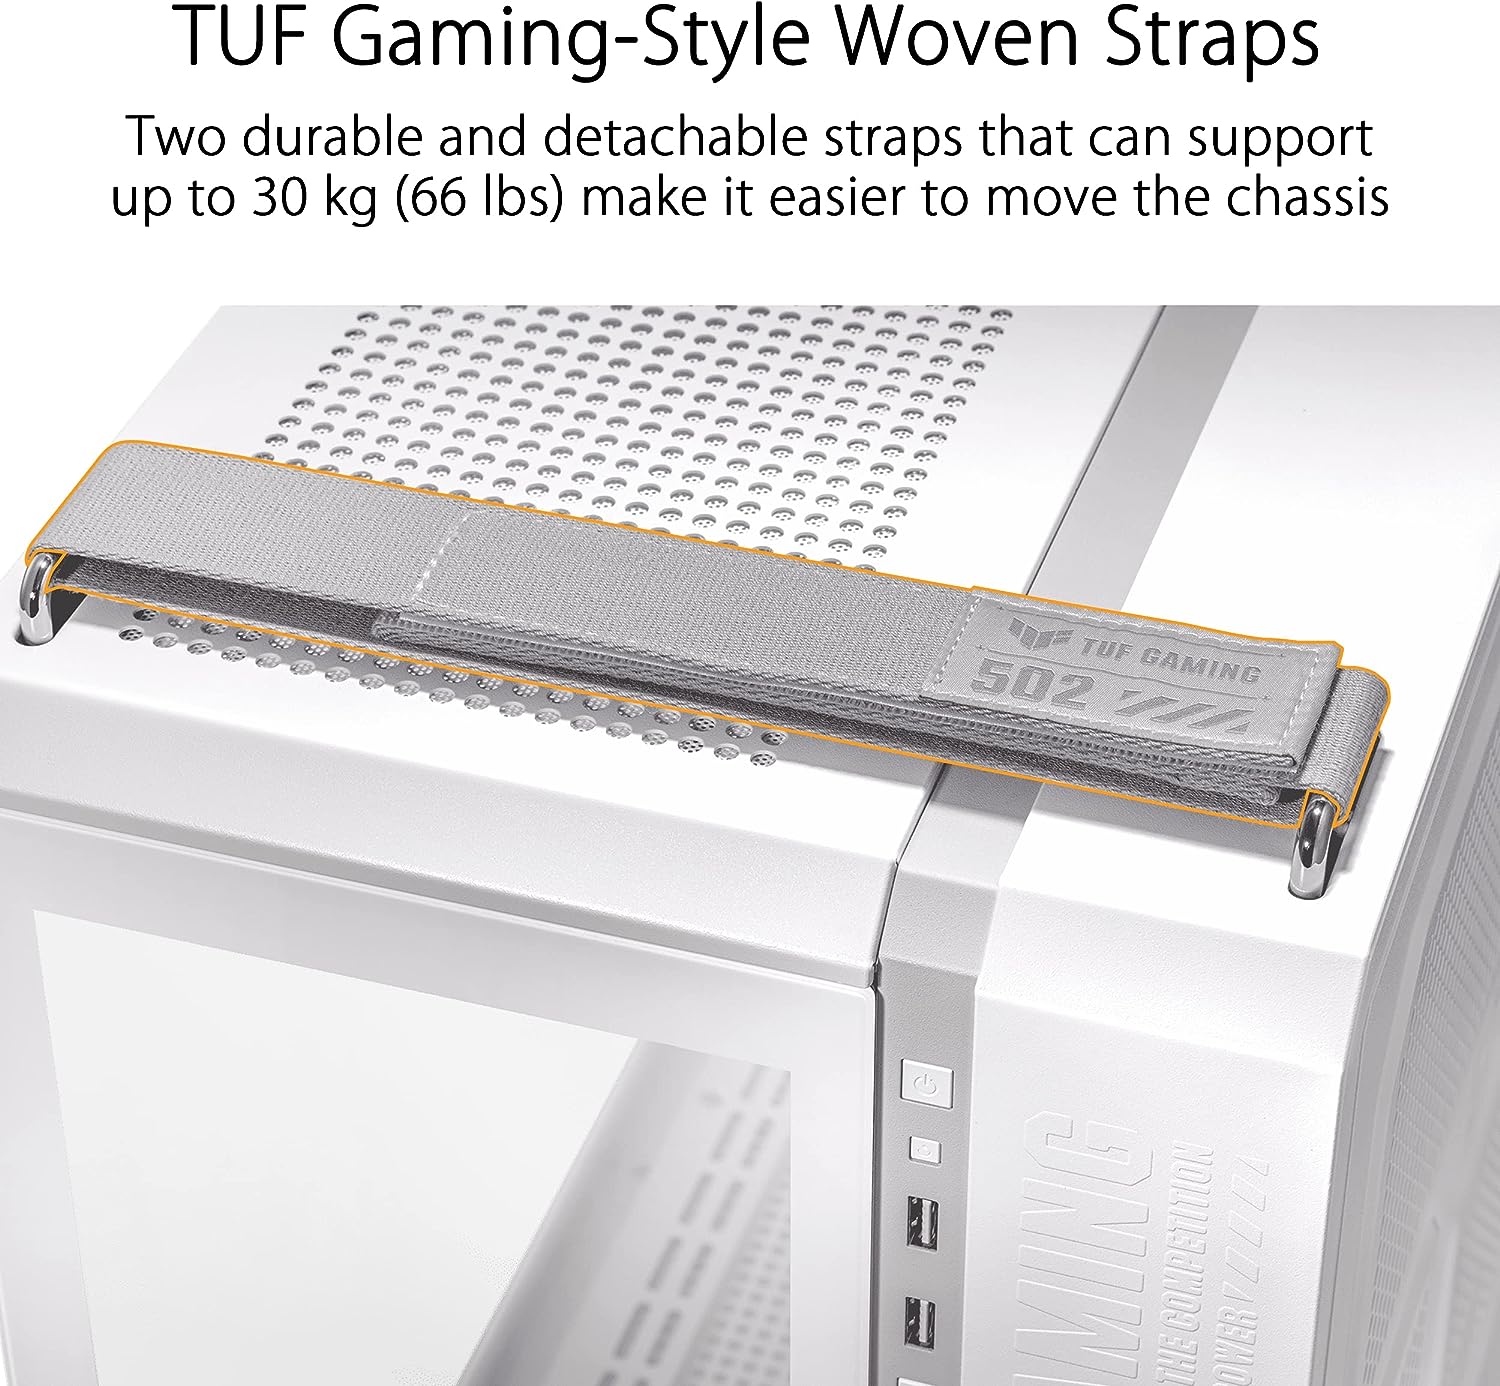 ASUS TUF Gaming GT502 ATX Mid-Tower Front Panel RGB WHITE GAMING CASE